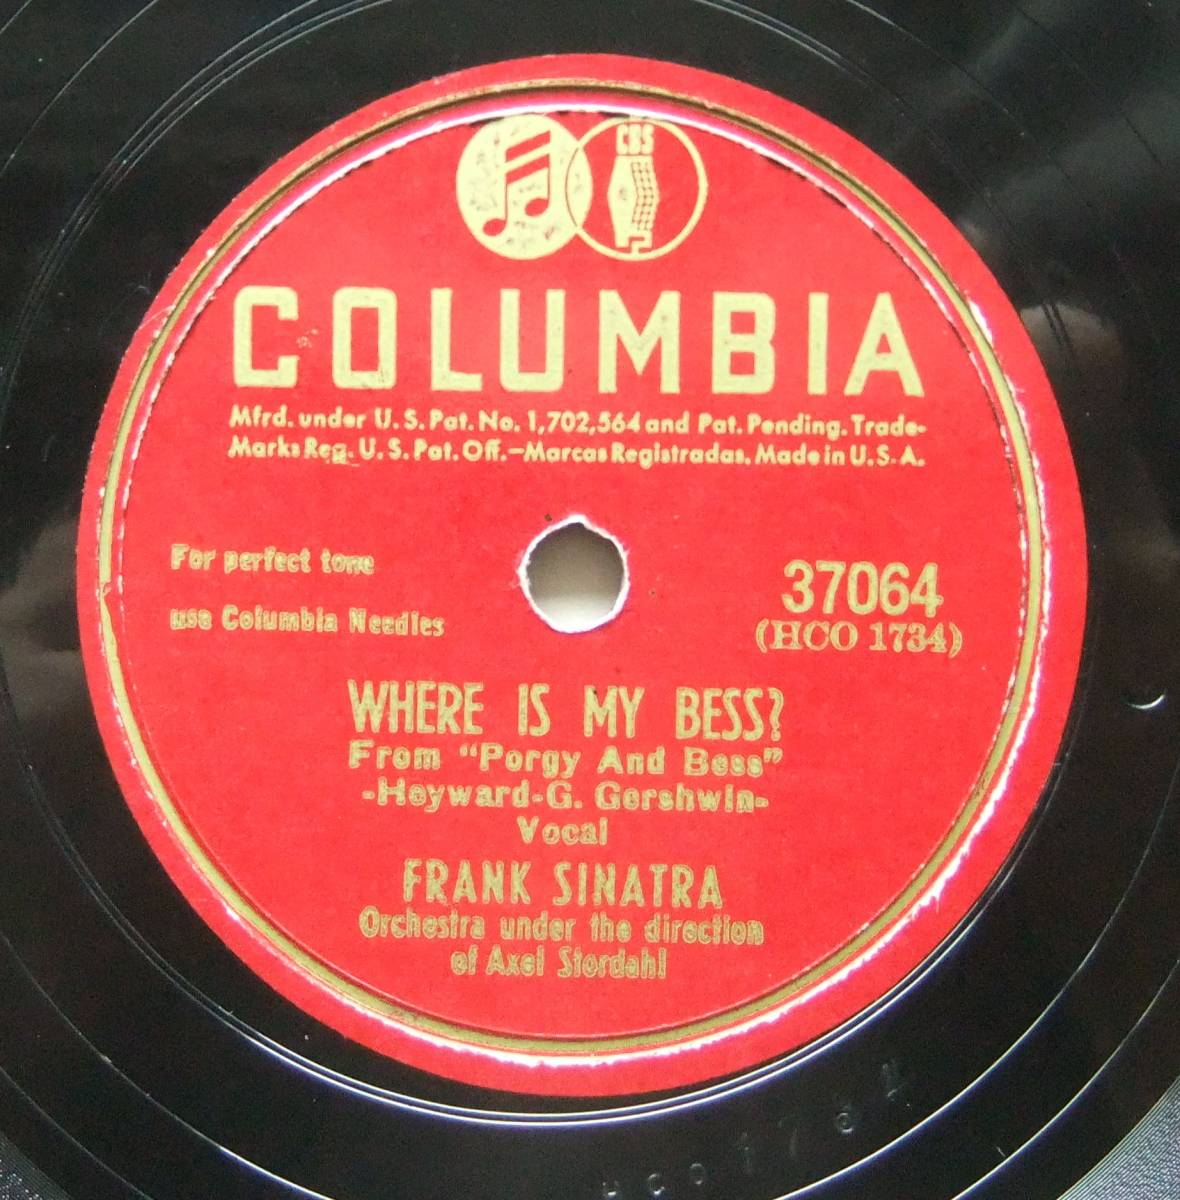 ◆ FRANK SINATRA / Where Is My Bess? / Begin The Biguine ◆ Columbia 37064 (78rpm SP) ◆